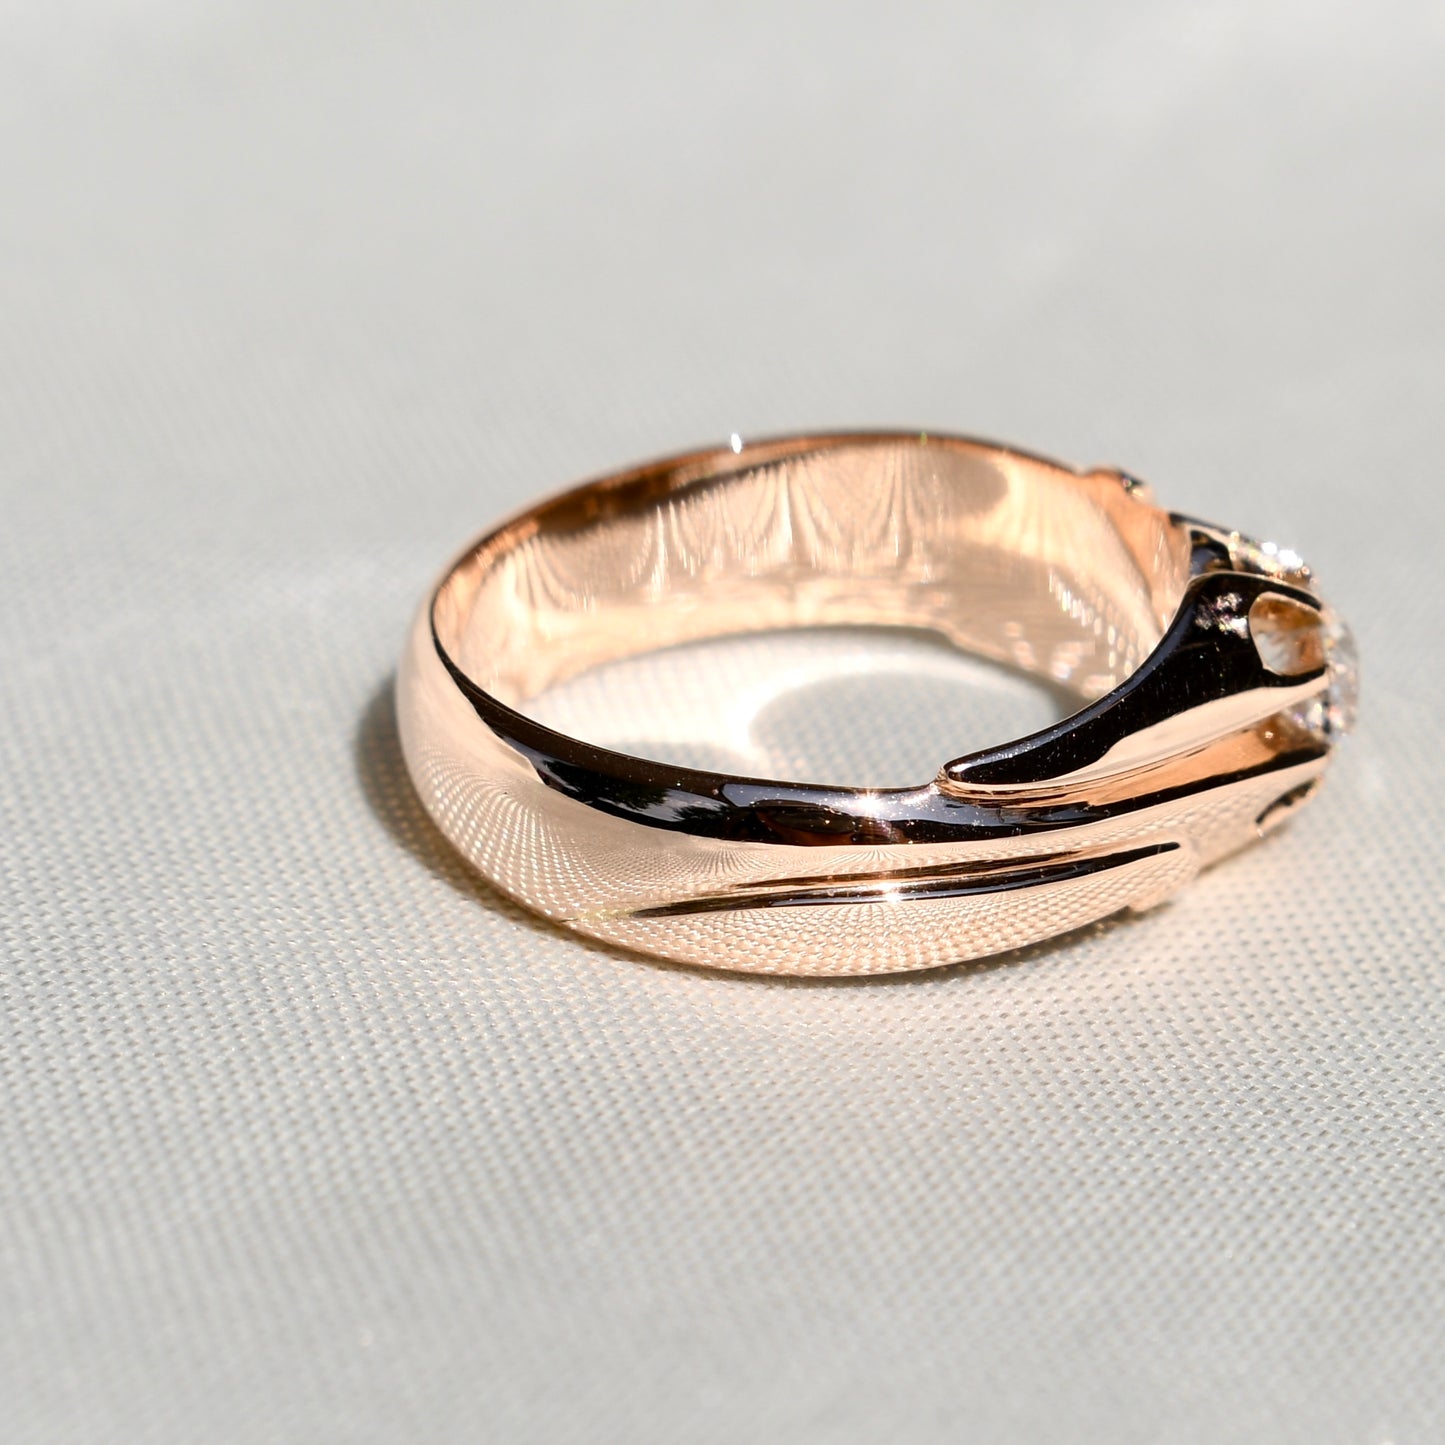 Antique 0.42ct old European cut diamond band ring